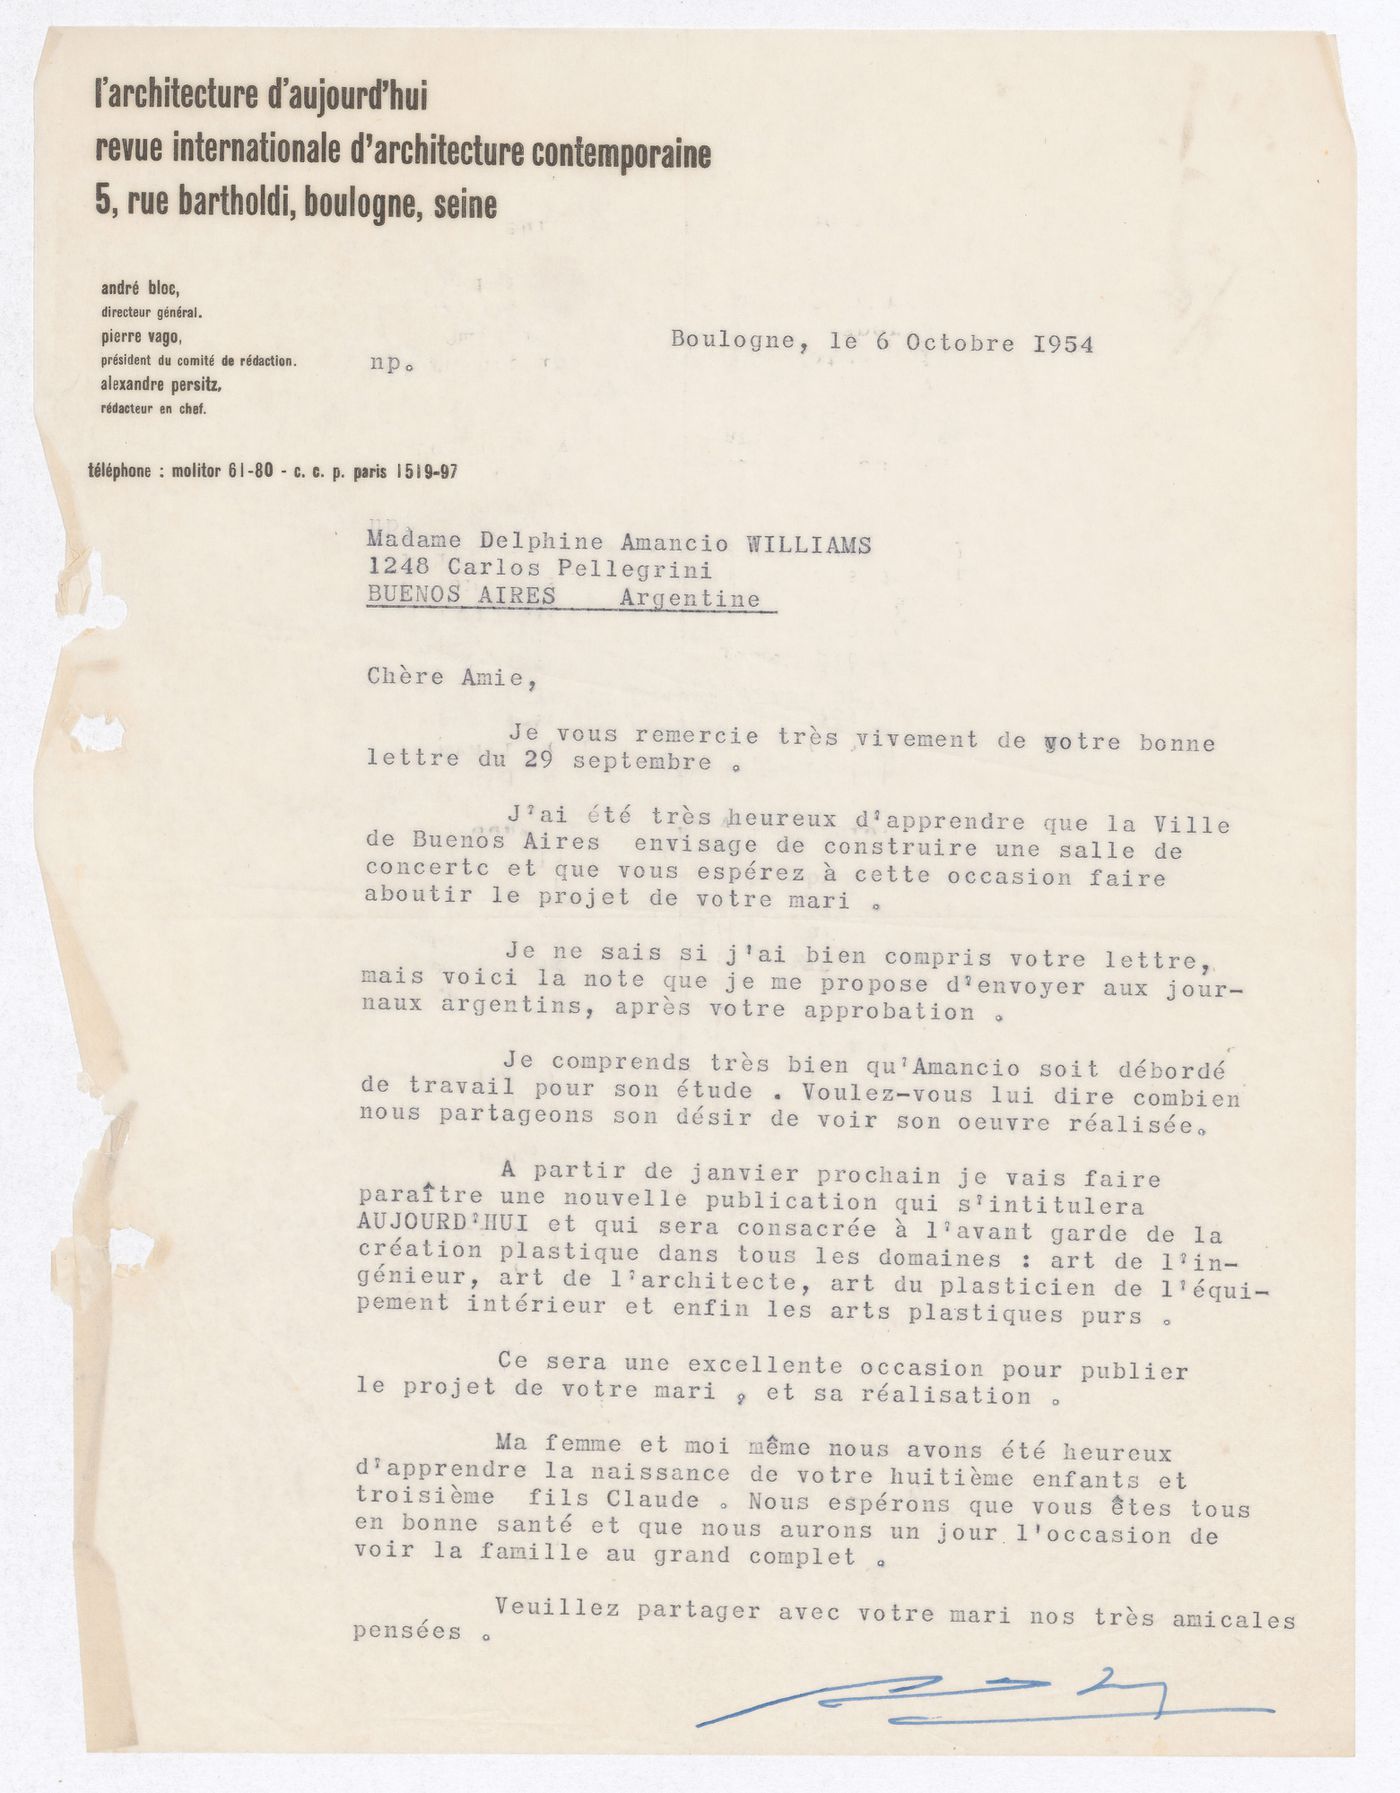 Correspondence, letter to Delfina Gálvez de Williams from periodical L'architecture d'aujourd'hui